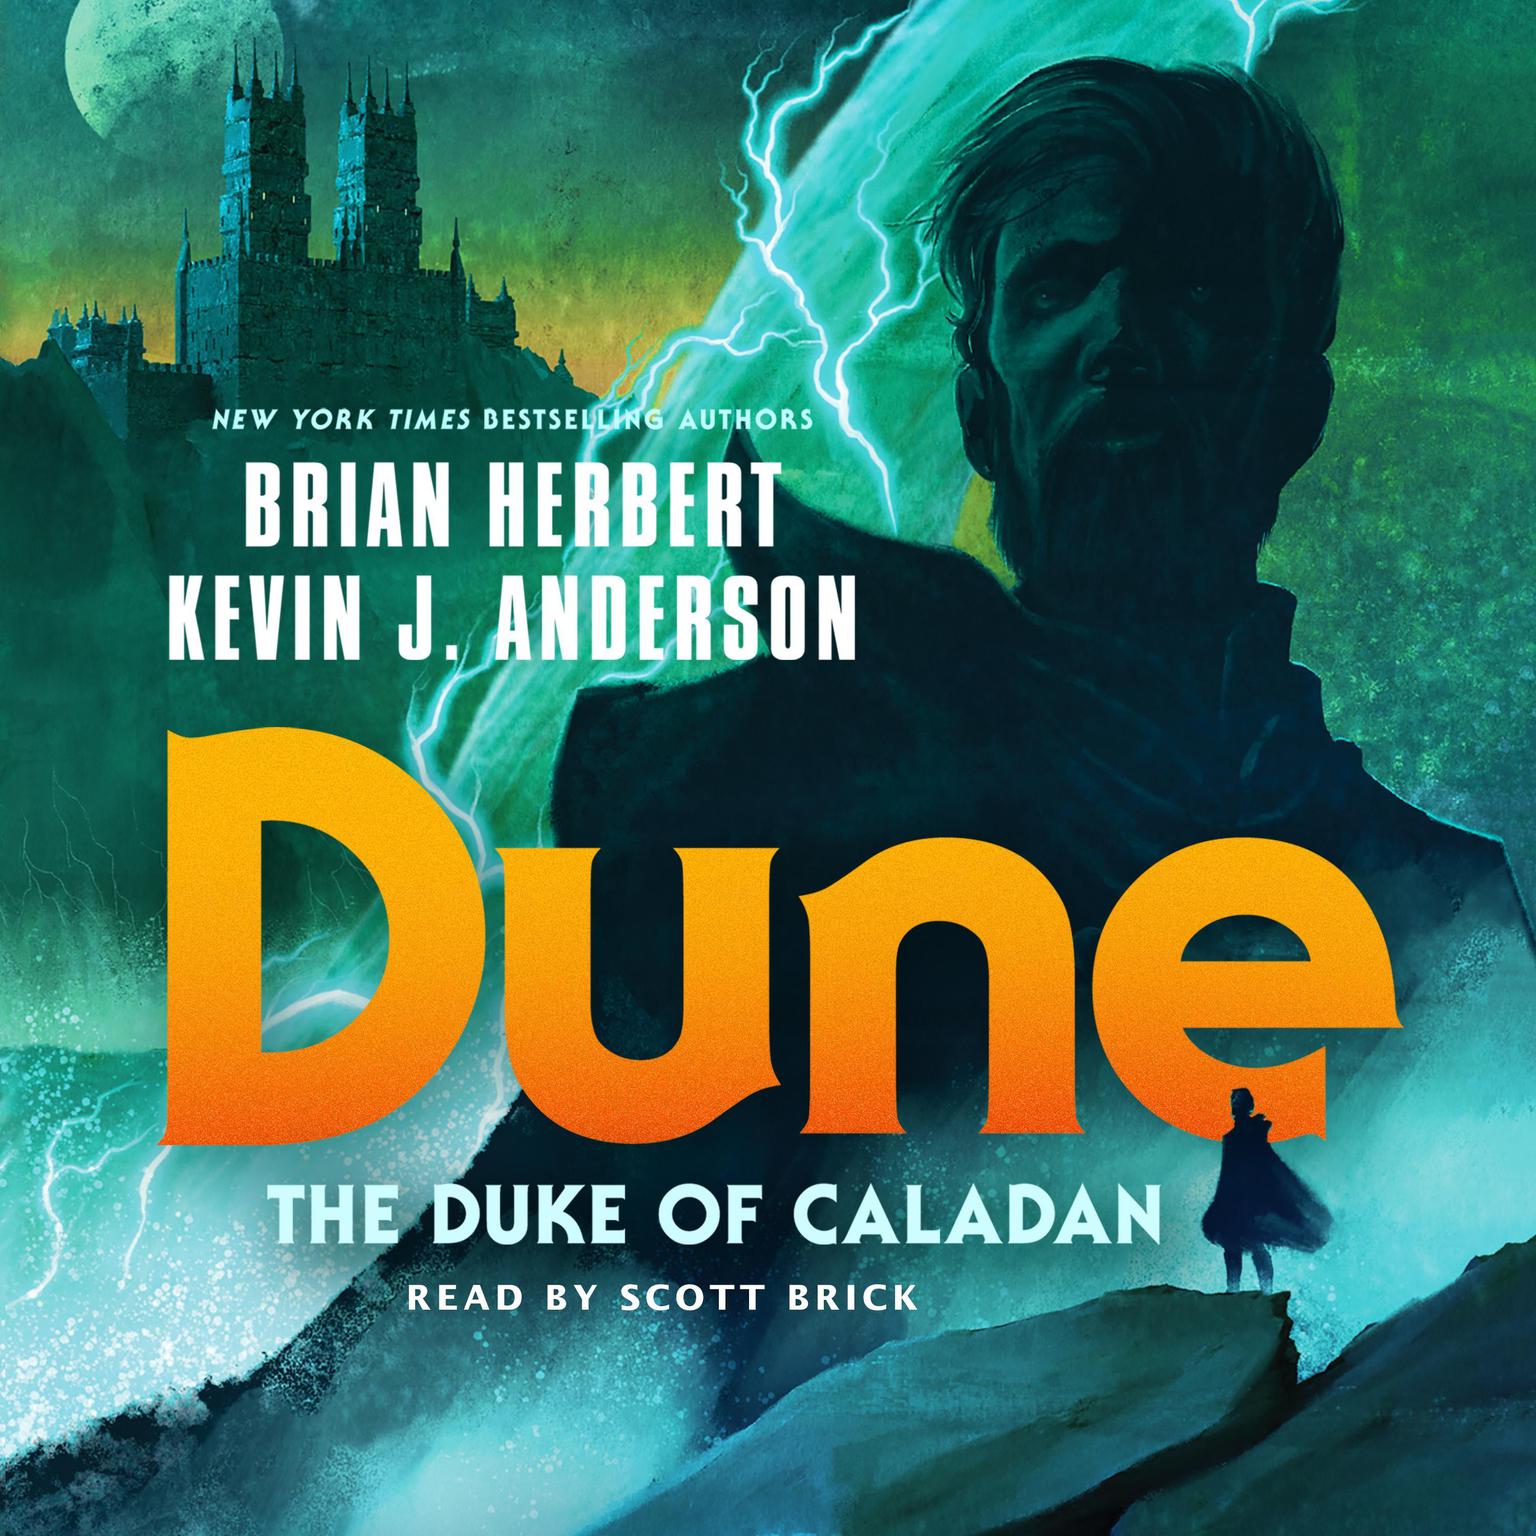 Dune: The Duke of Caladan Audiobook, by Brian Herbert